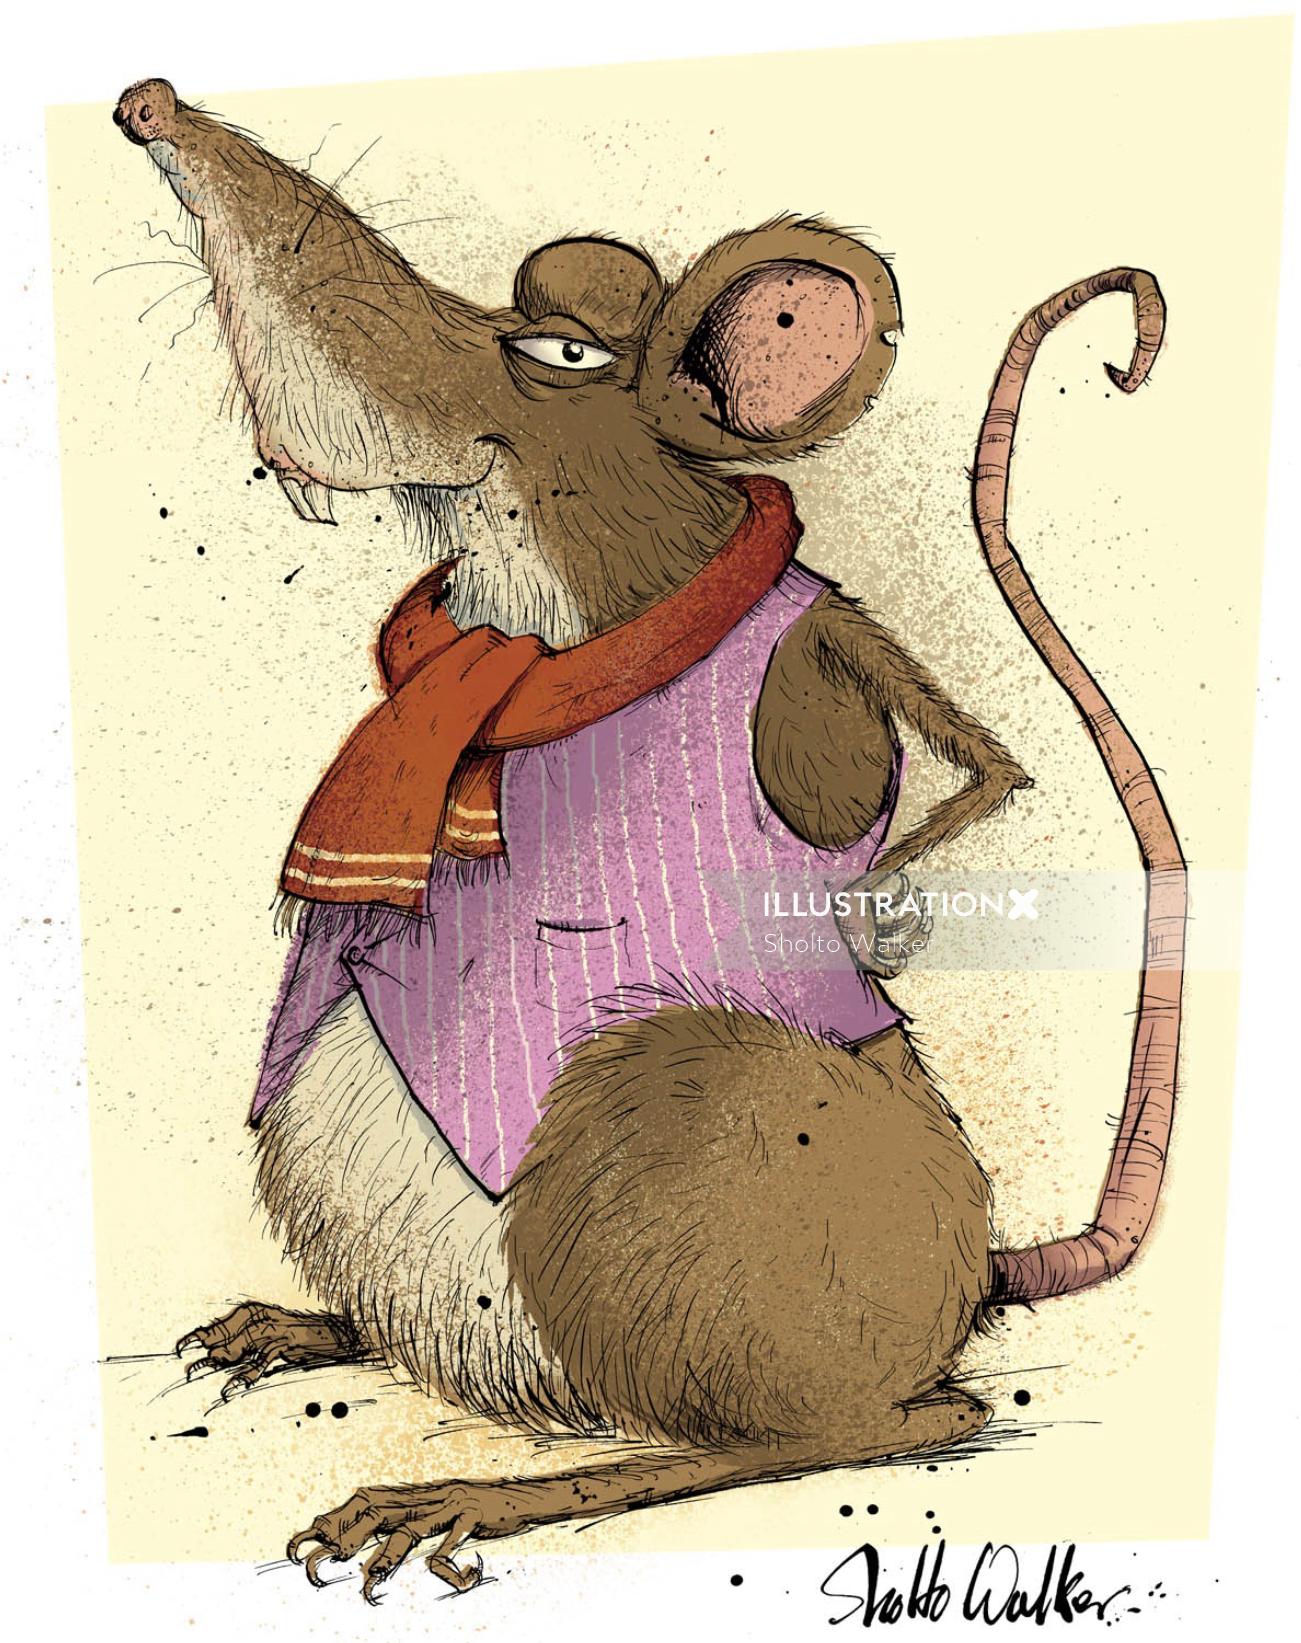 Rat character illustration by Sholto Walker